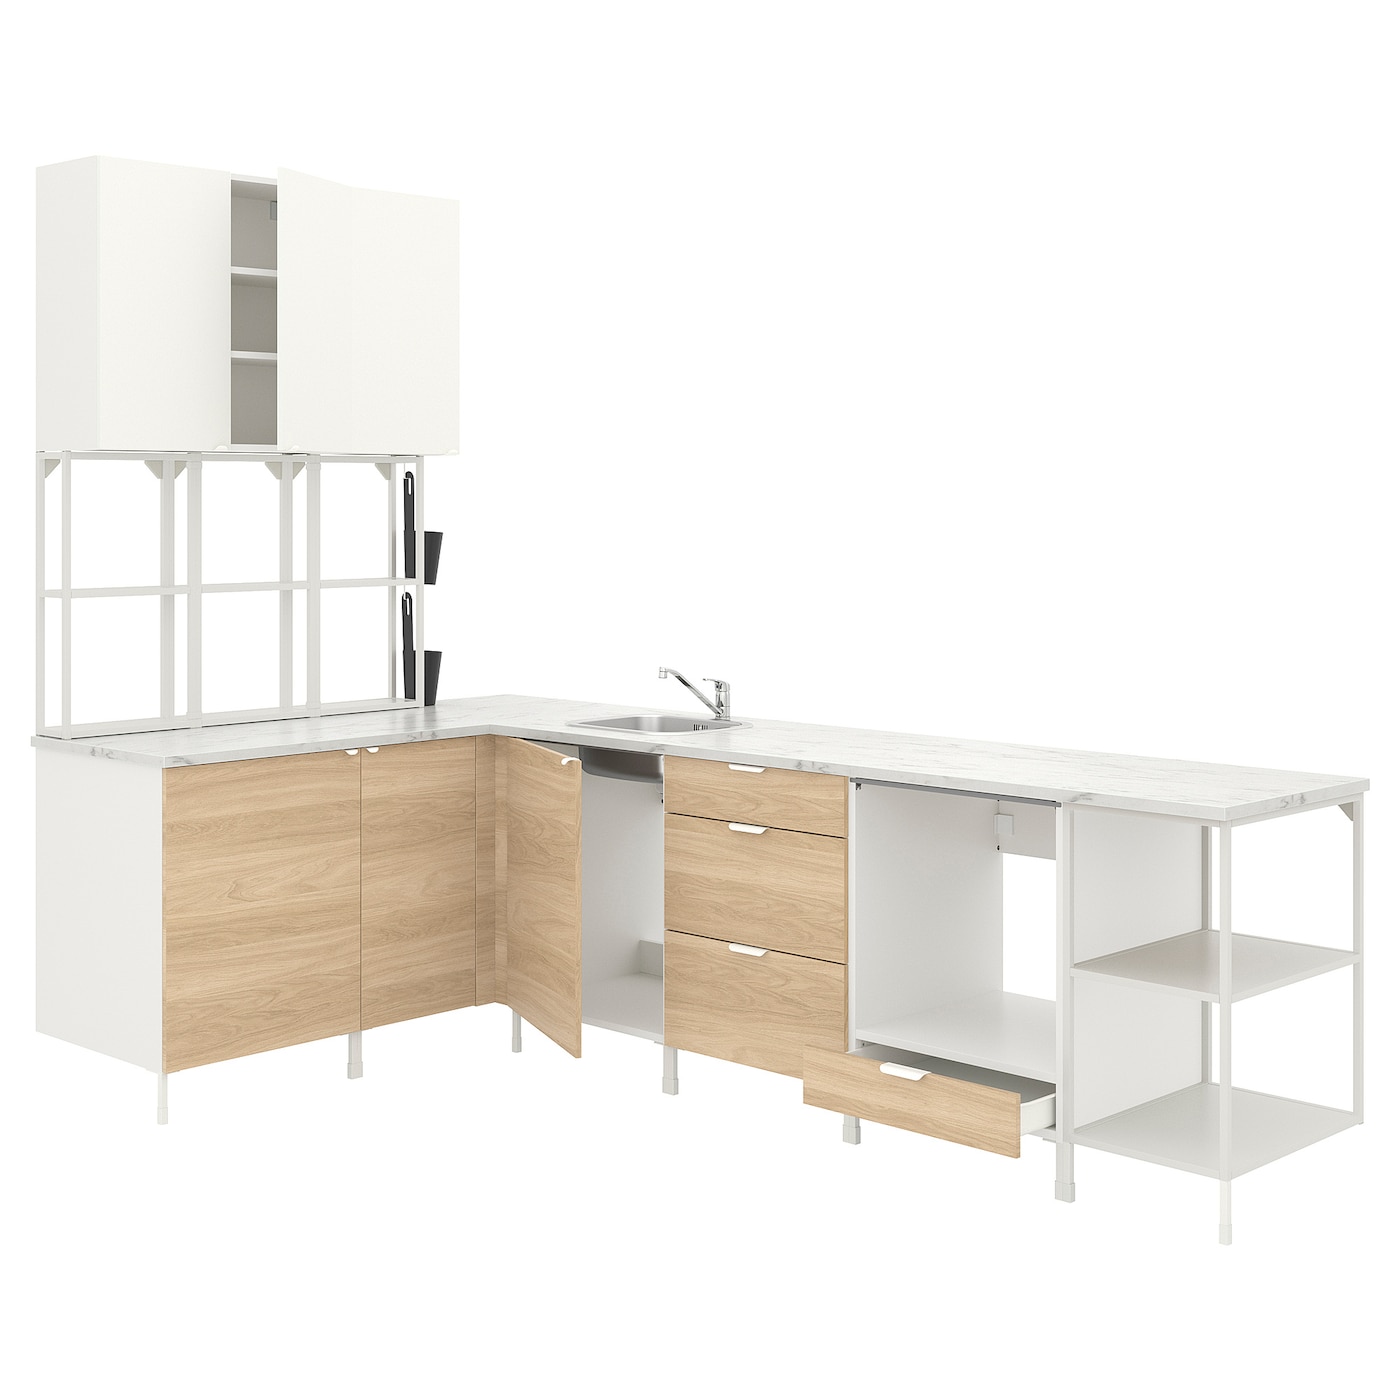 Угловая кухонная комбинация для хранения - ENHET  IKEA/ ЭНХЕТ ИКЕА, 168,5х290,5х75 см, белый/бежевый